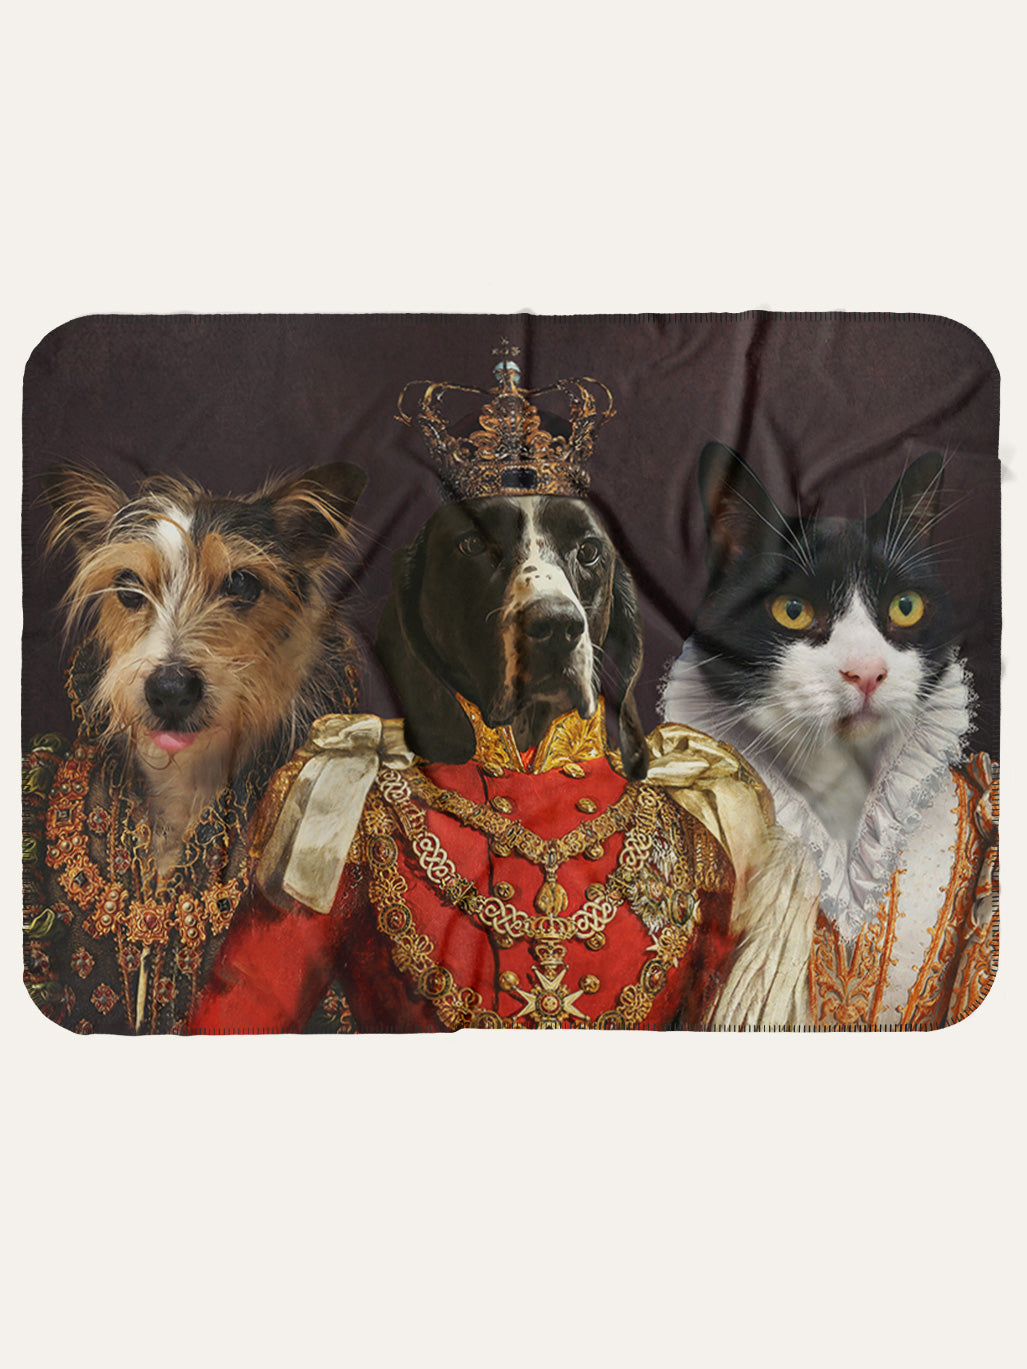 The Queen, Prince & Princess - Custom Pet Blanket